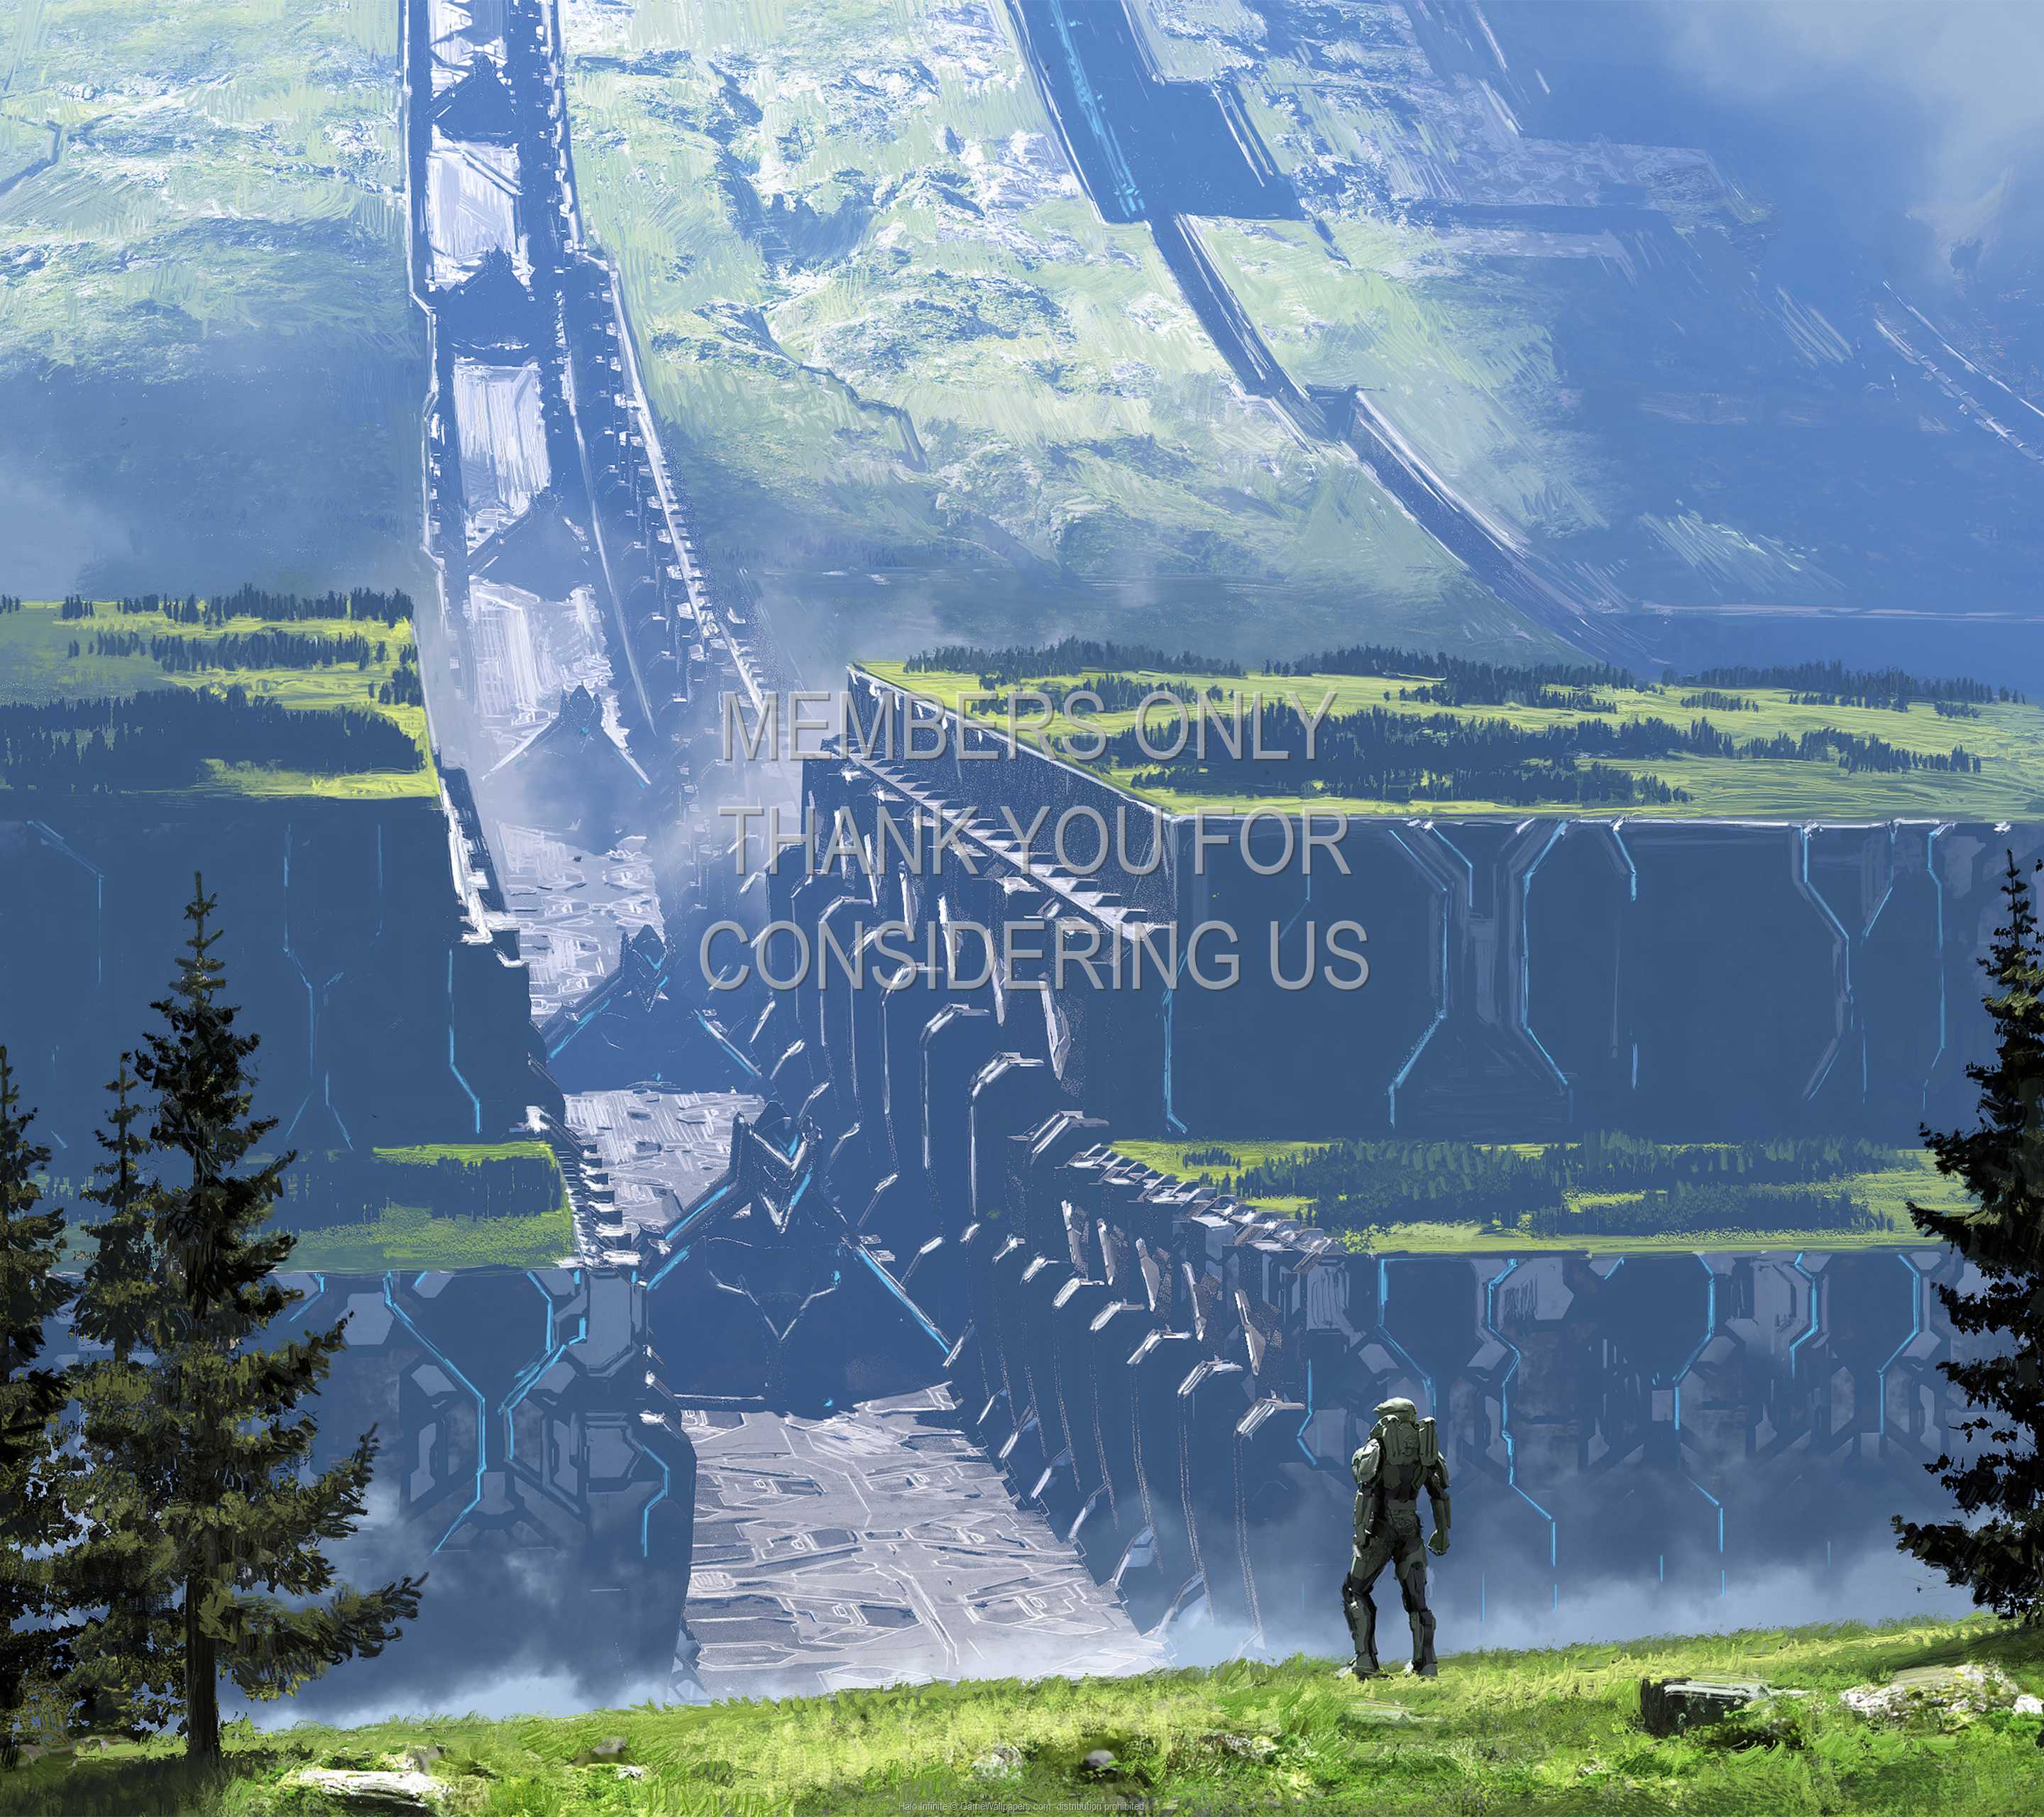 Halo: Infinite 1440p Horizontal Mobile wallpaper or background 21